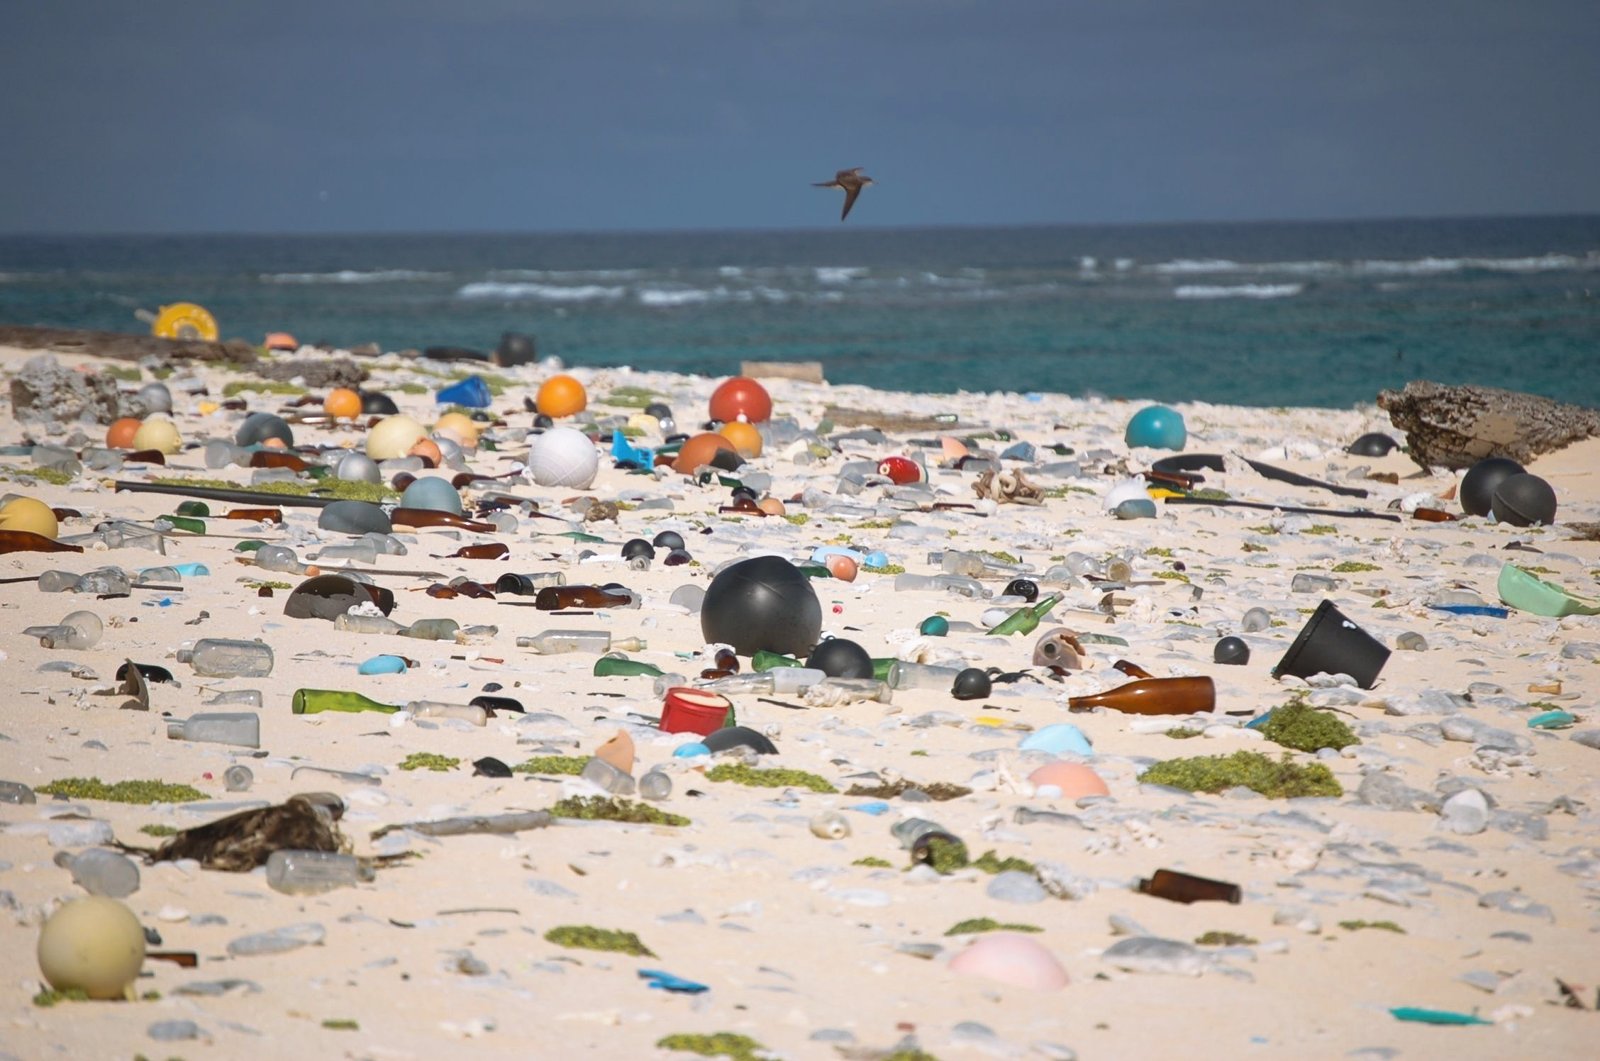 Title: Beach strewn with plastic debris | Author: U.S. Fish and Wildlife Service Headquarters | Source: U.S. Fish and Wildlife Service Headquarters | License: CC0